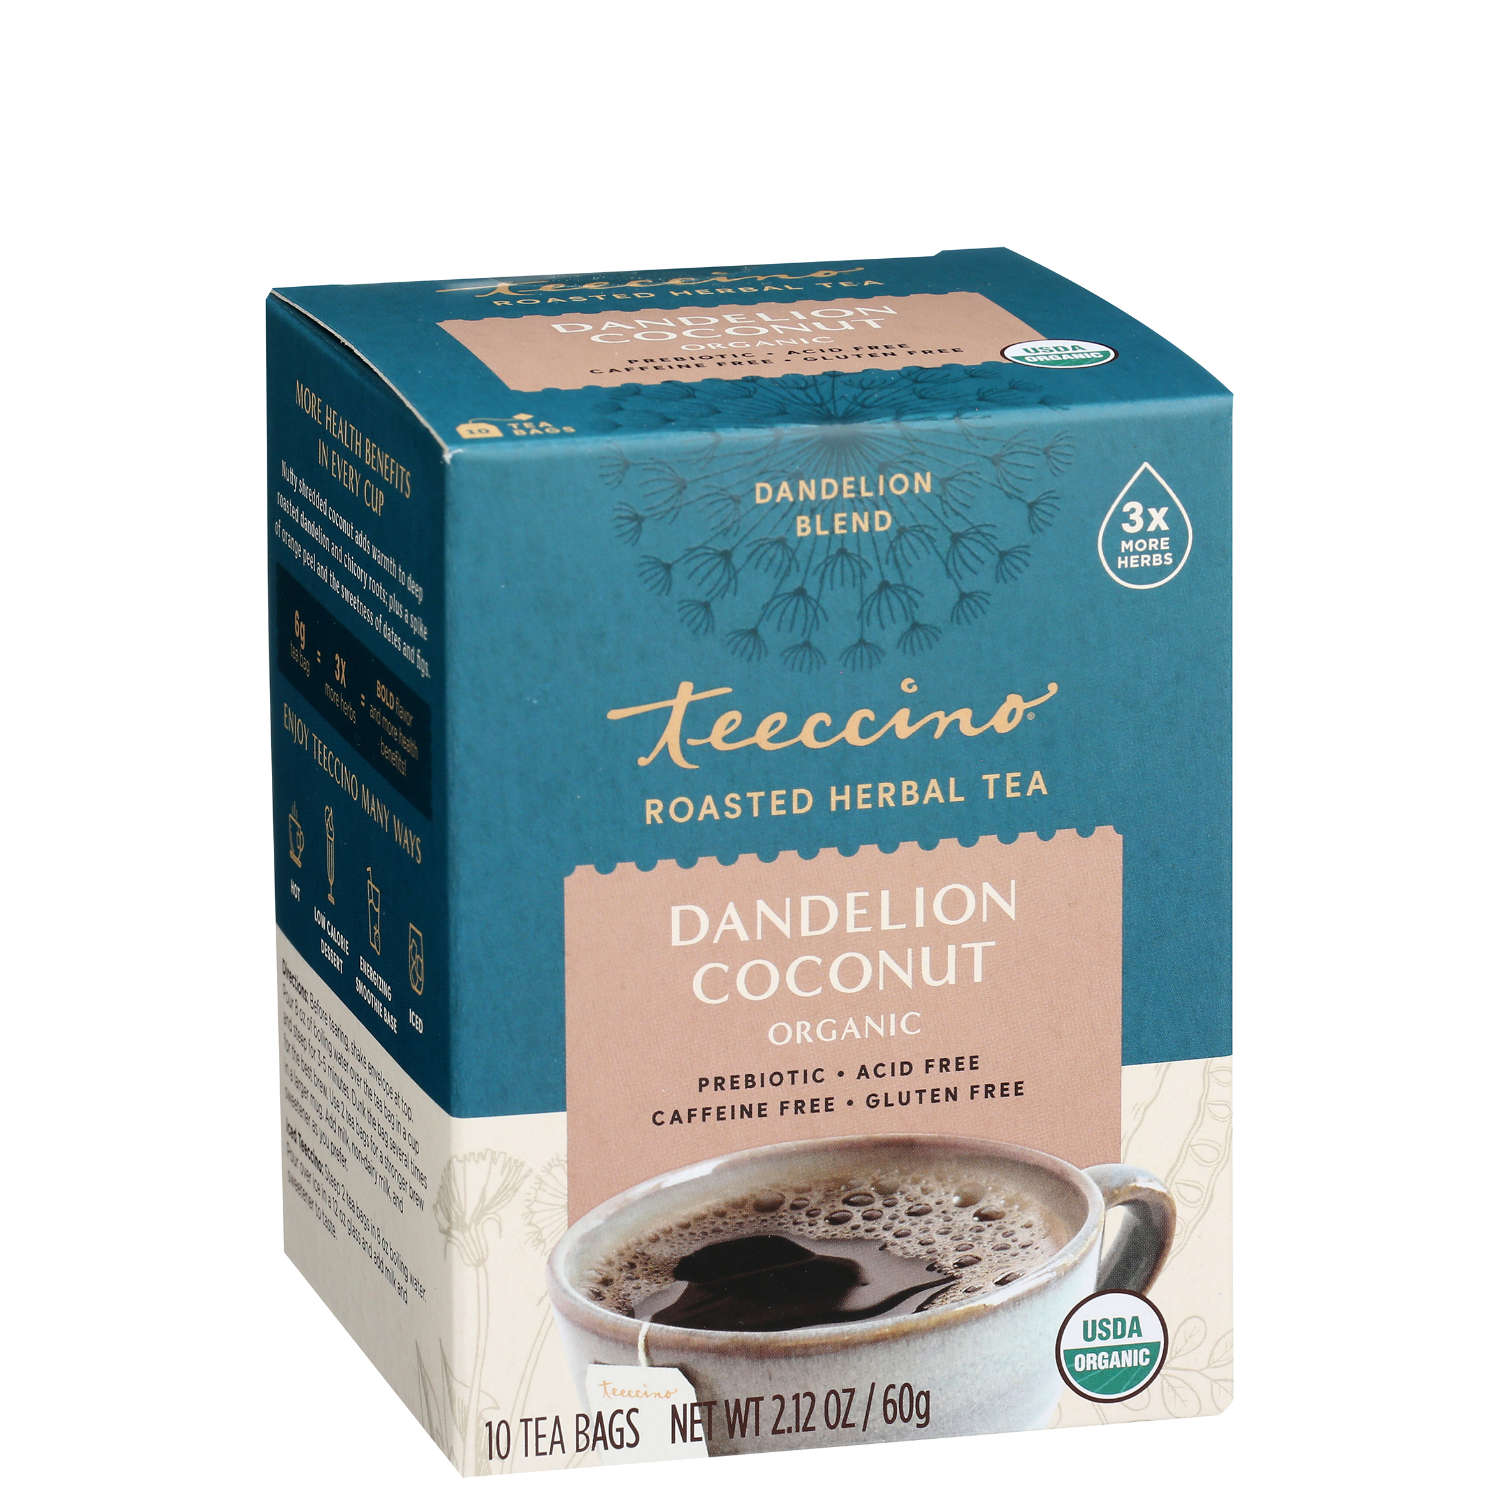 Teeccino Dandelion Coconut Roasted Herbal Tea 10 Tea Bags